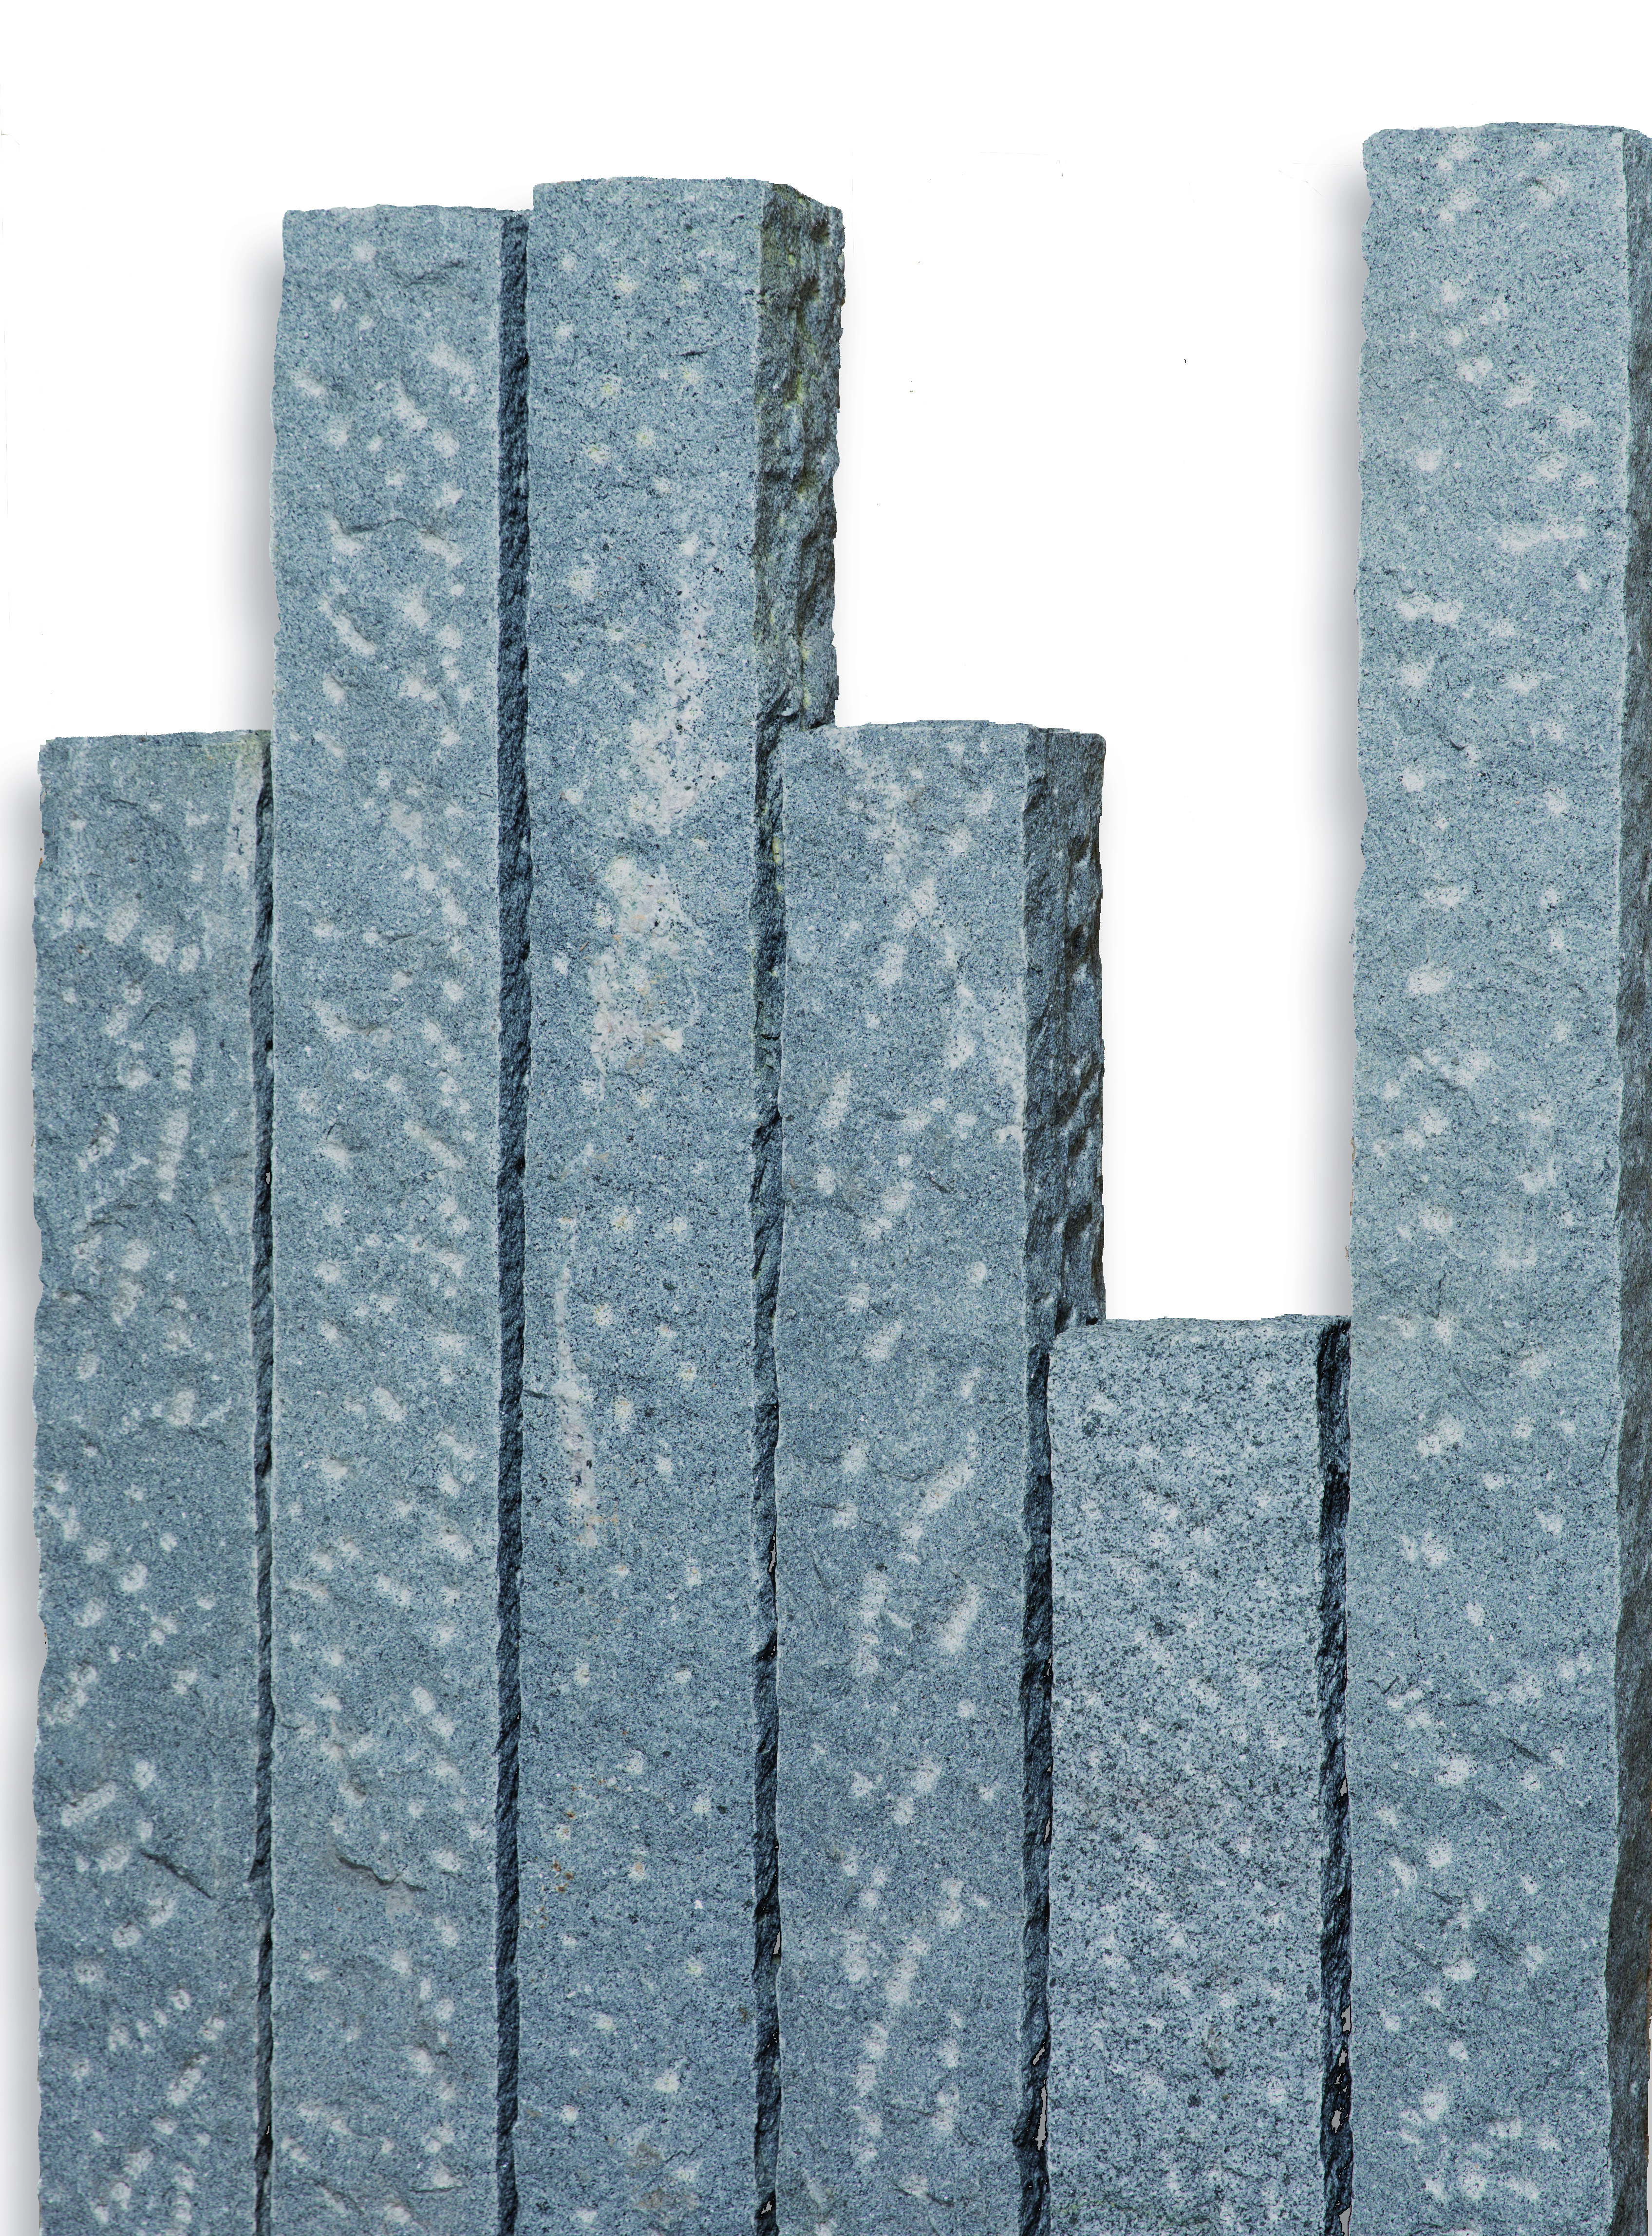 SELTRA NATURSTEINHANDEL GMBH ZENTRALE -  Palisade GALA RUSTIQUE 12x12x100cm anthrazit Granit China